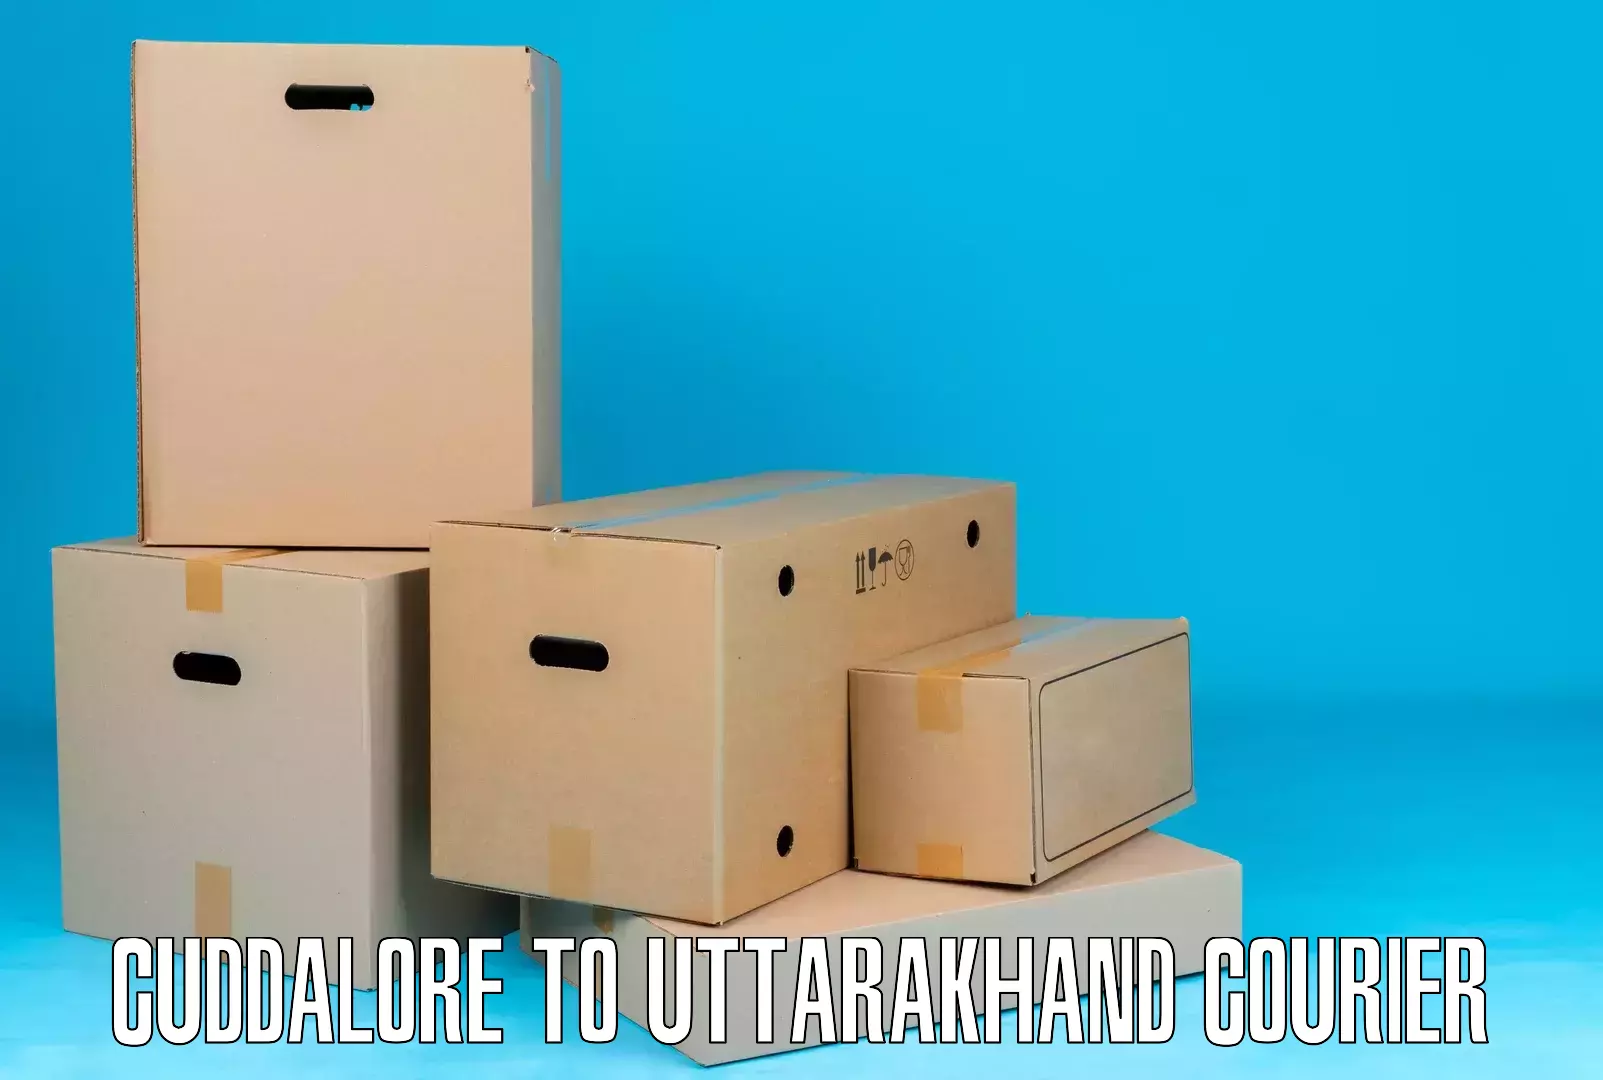 Same-day delivery solutions Cuddalore to Karnaprayag